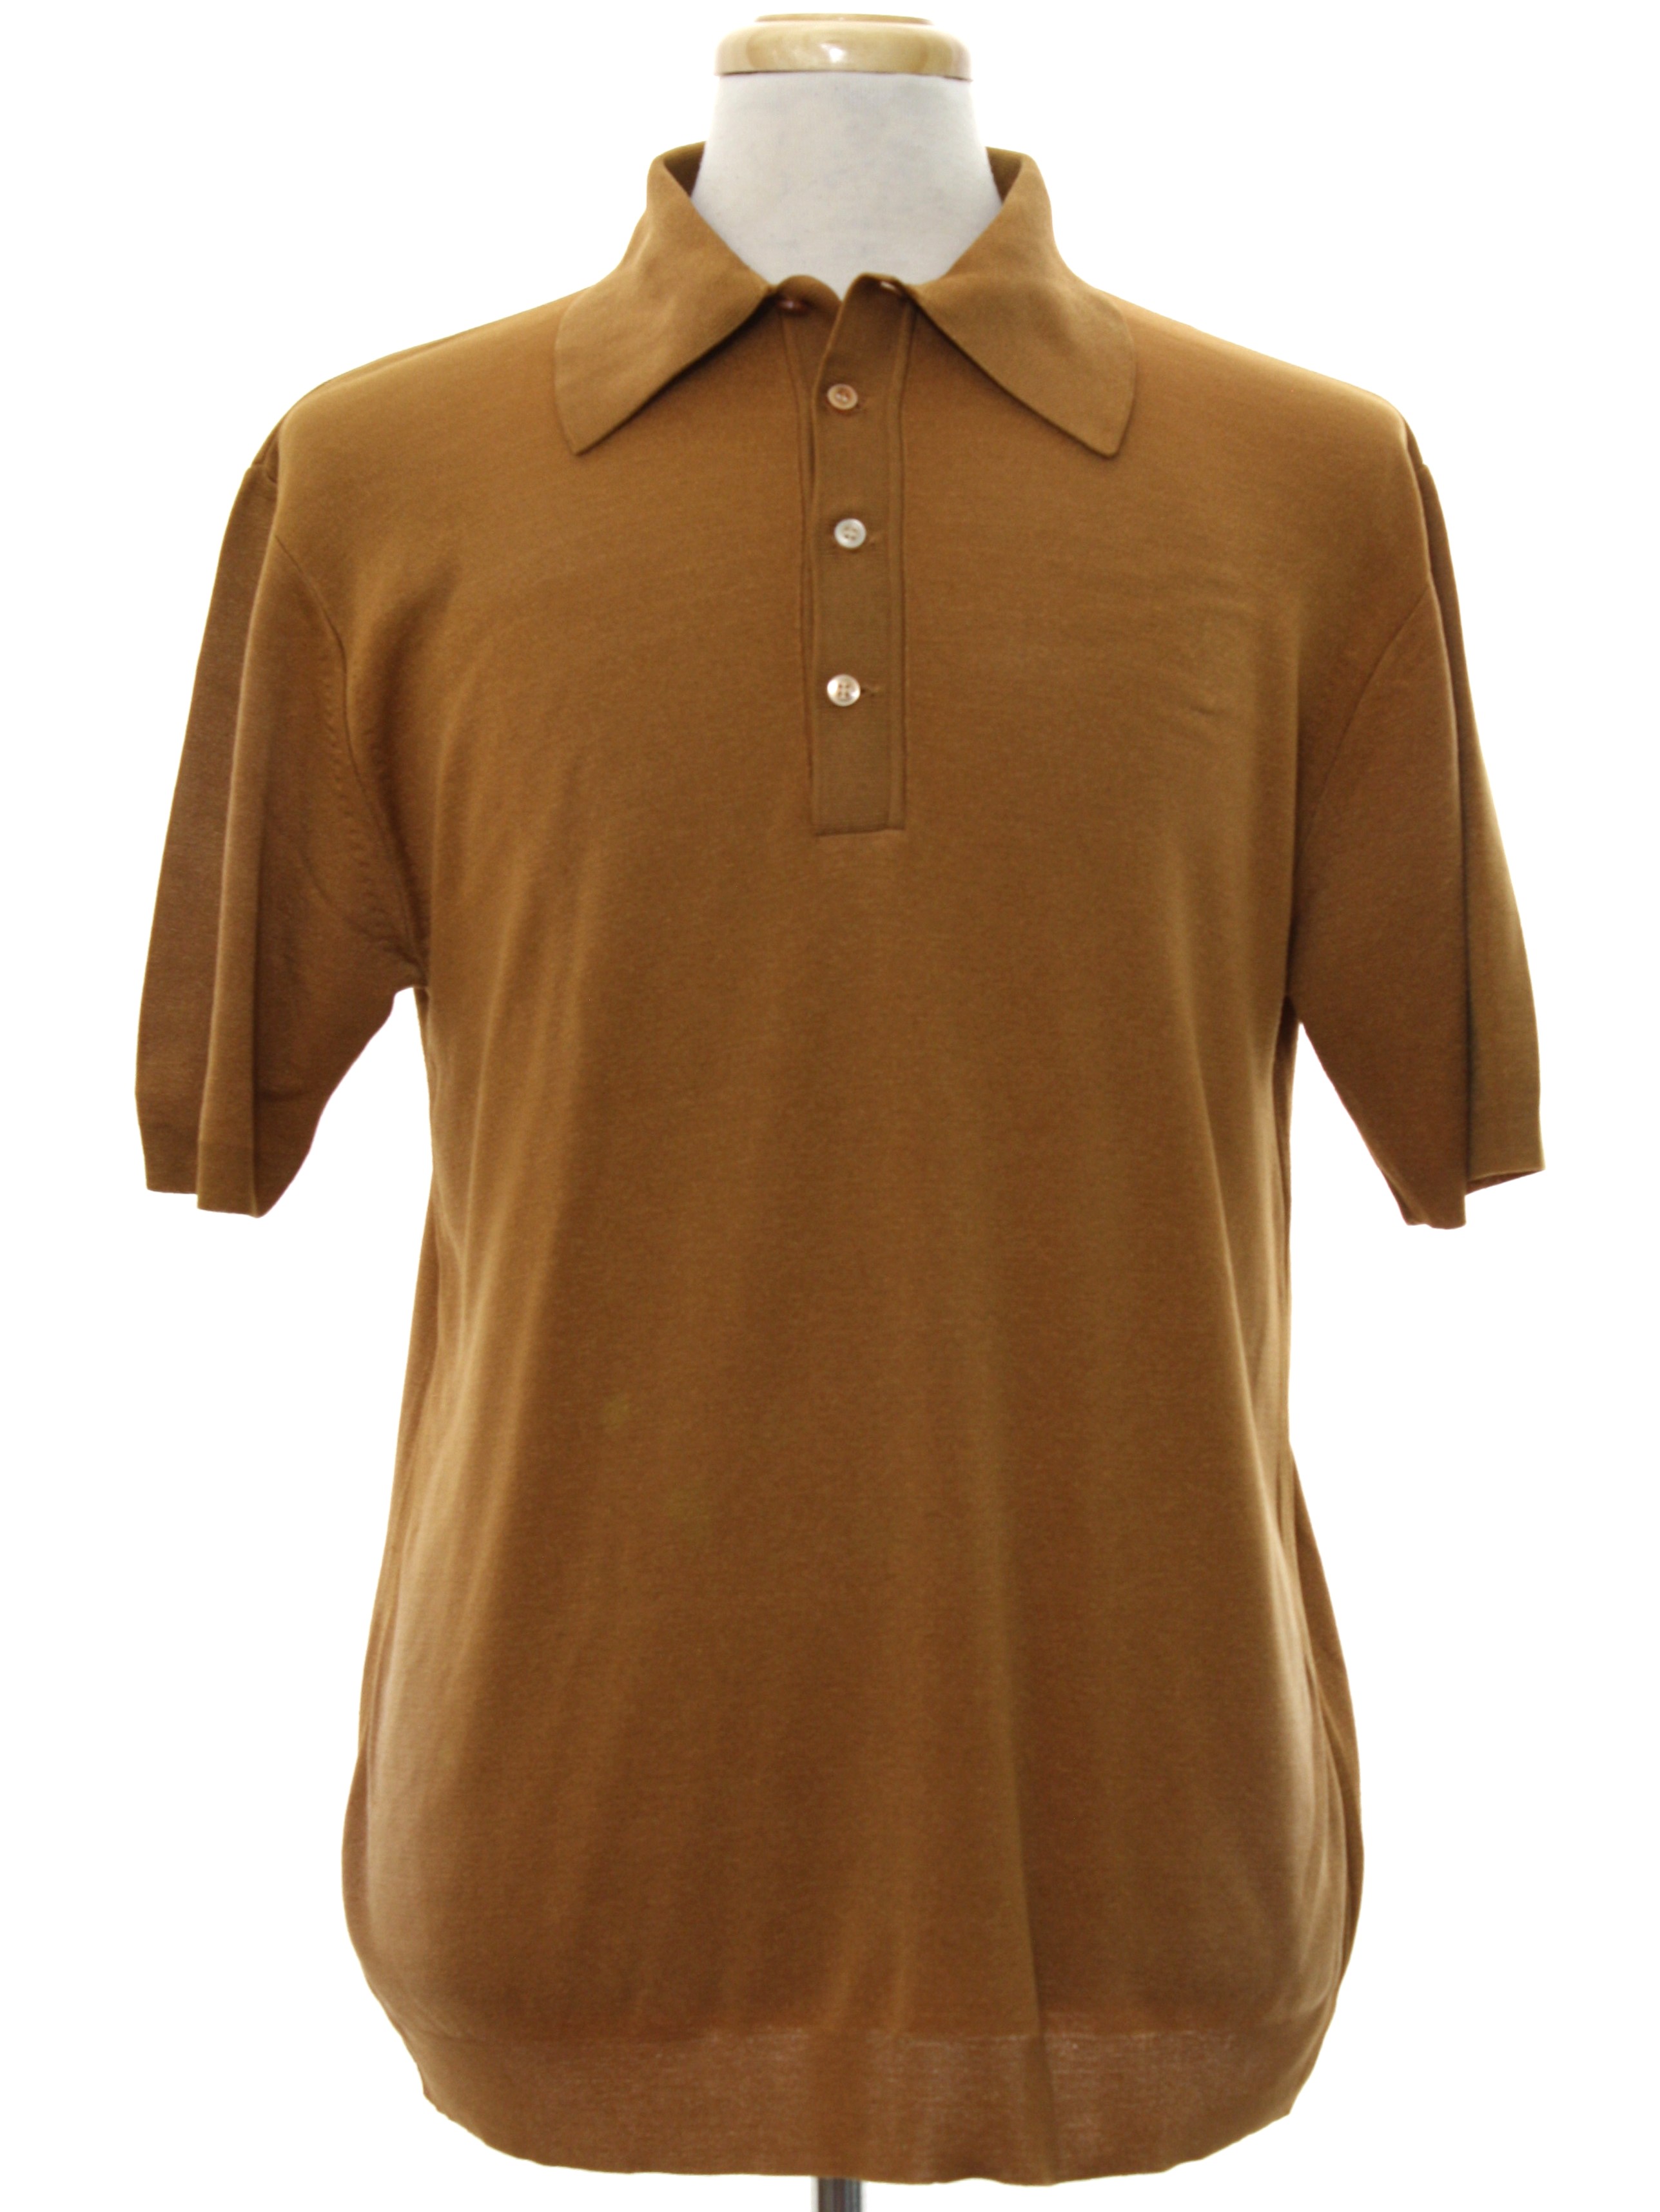 1960s Vintage Knit Shirt: Late 60s -Probably Ban-Lon- Mens golden tan ...